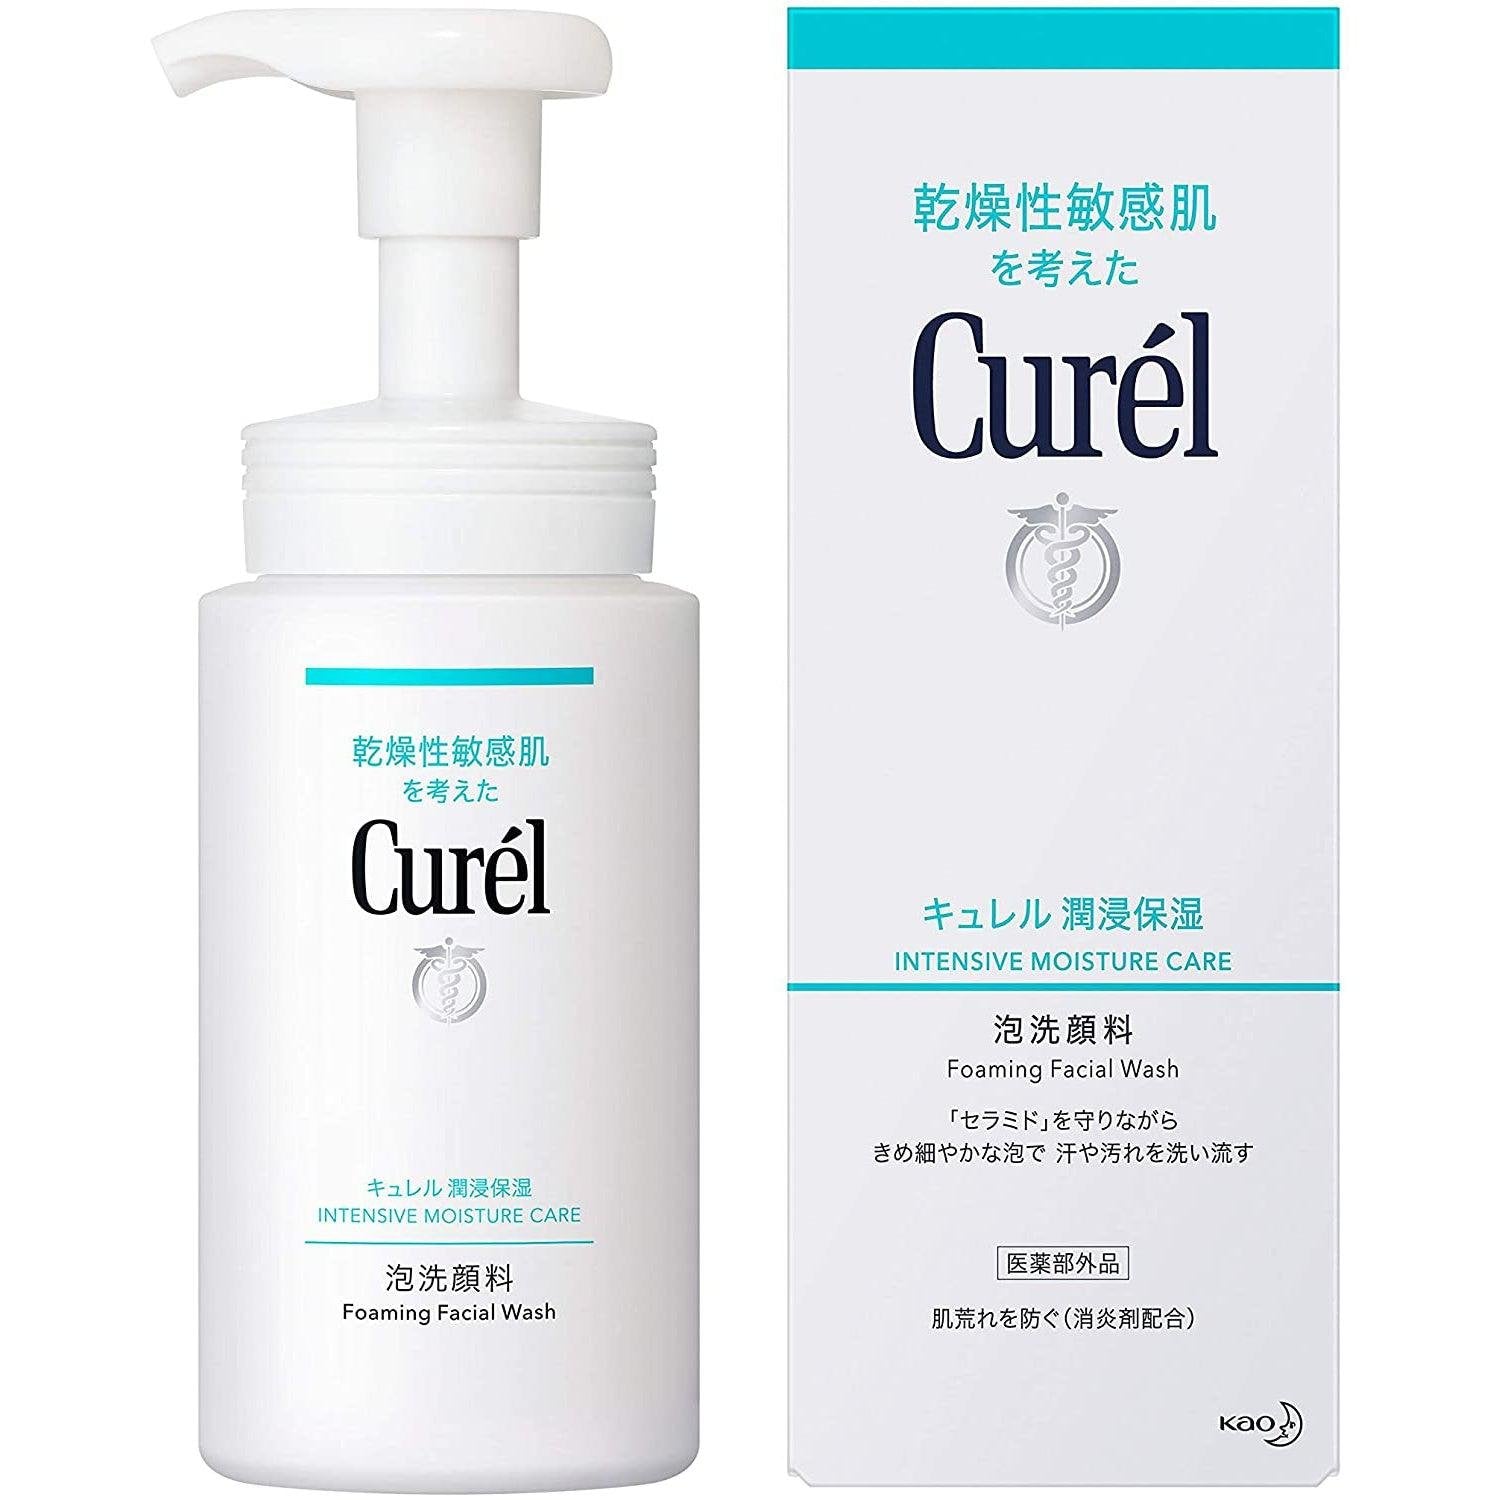 P-1-KAO-CUR-FW-150-Kao Curel Foaming Face Wash Intensive Moisture Care 150ml.jpg